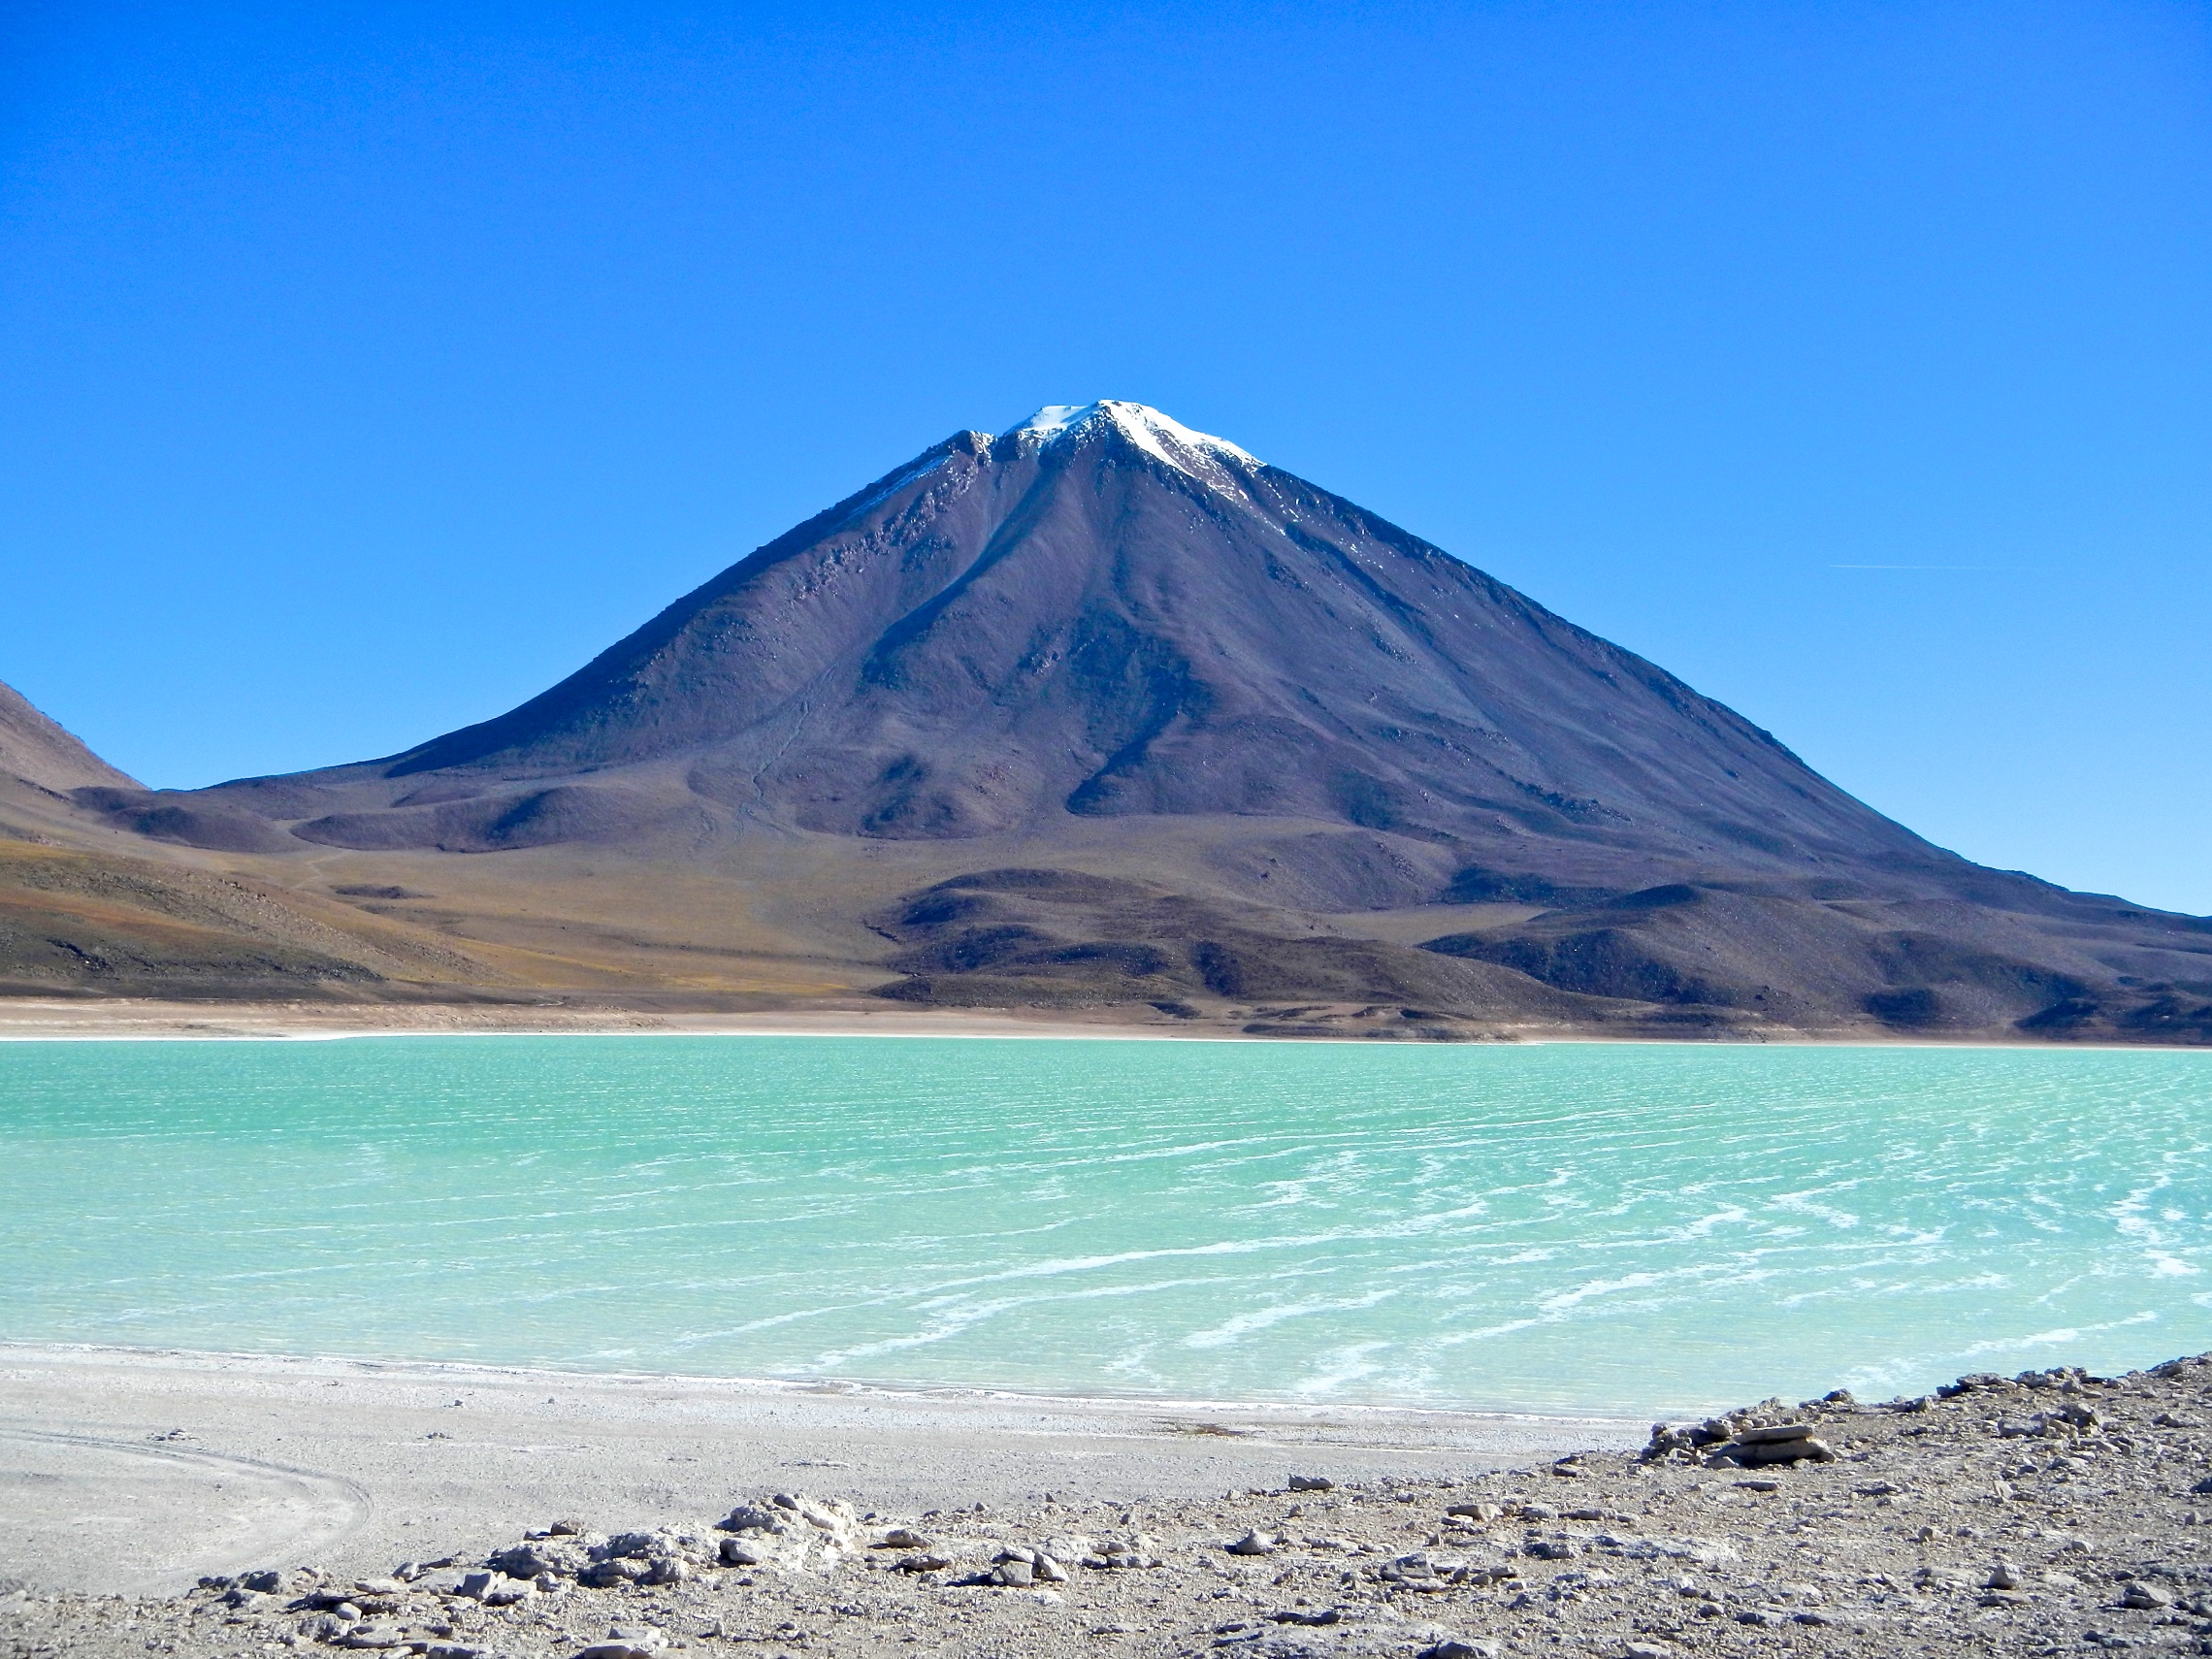  Llicancabur volcano (5960m) at Laguna Verde, Eduardo Avaroa National Park, Bolivi 